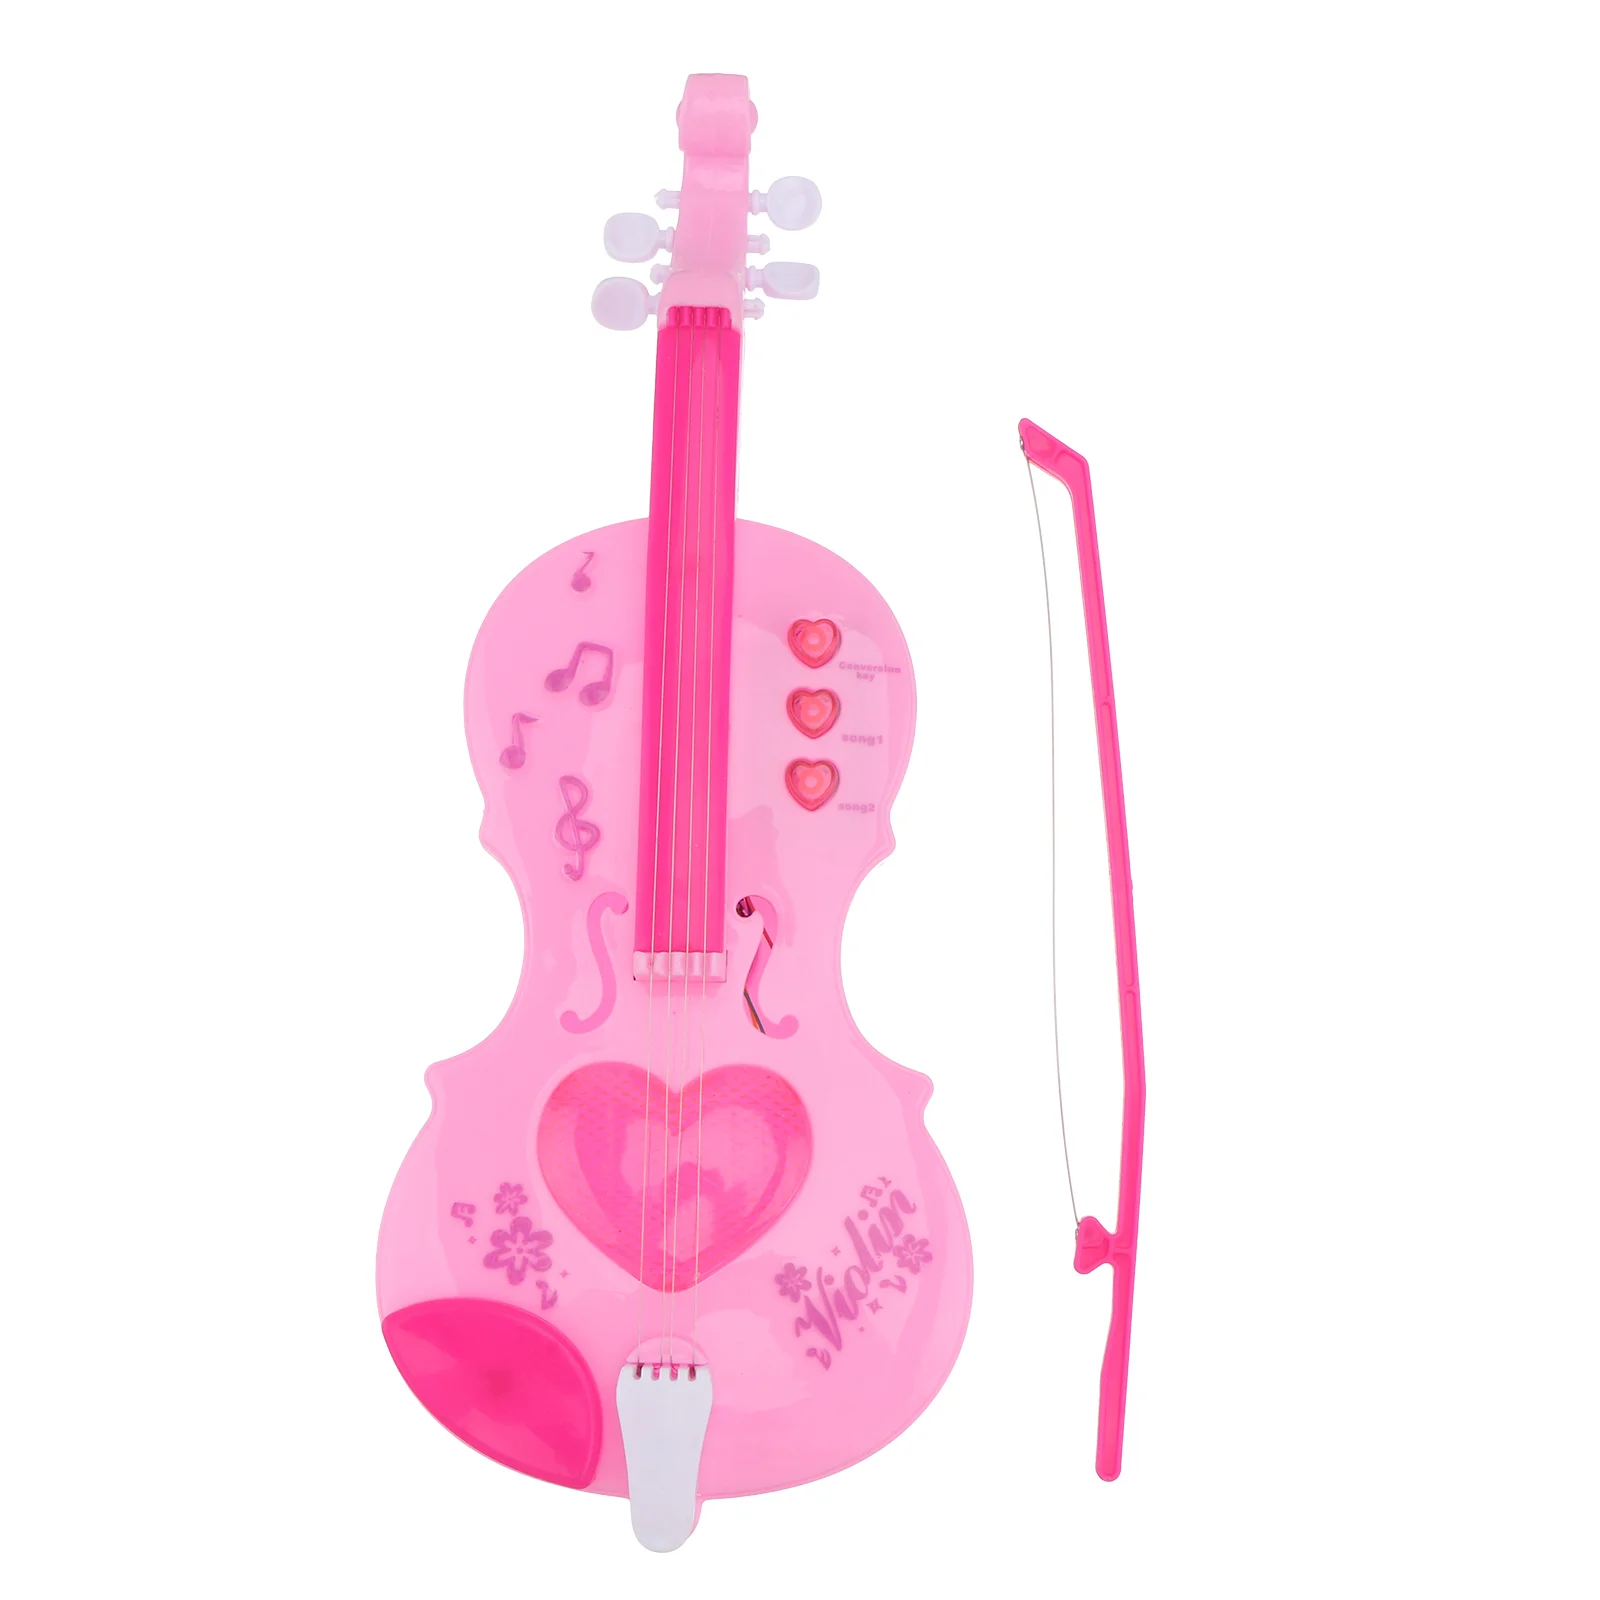 Купи Violin Toy Kids Children Toys Instrument Plaything Volin Musical Mini Beginner Instruments Toddler Education Educational S за 320 рублей в магазине AliExpress